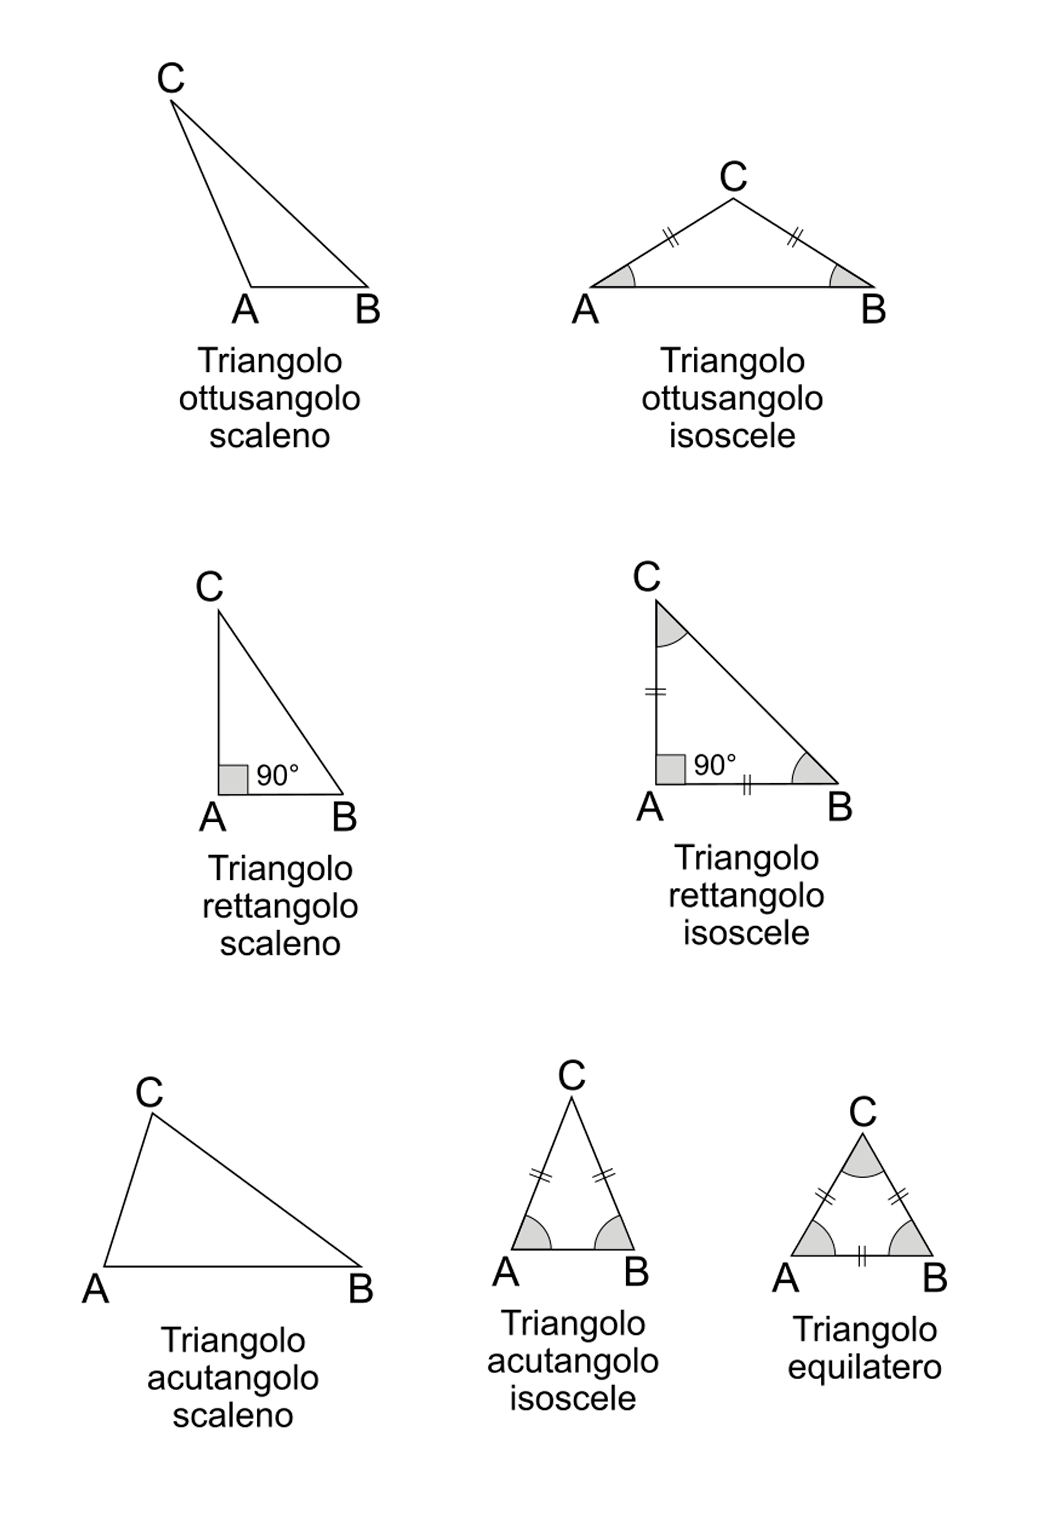 Figure geometriche - Tutti i tipi di triangolo